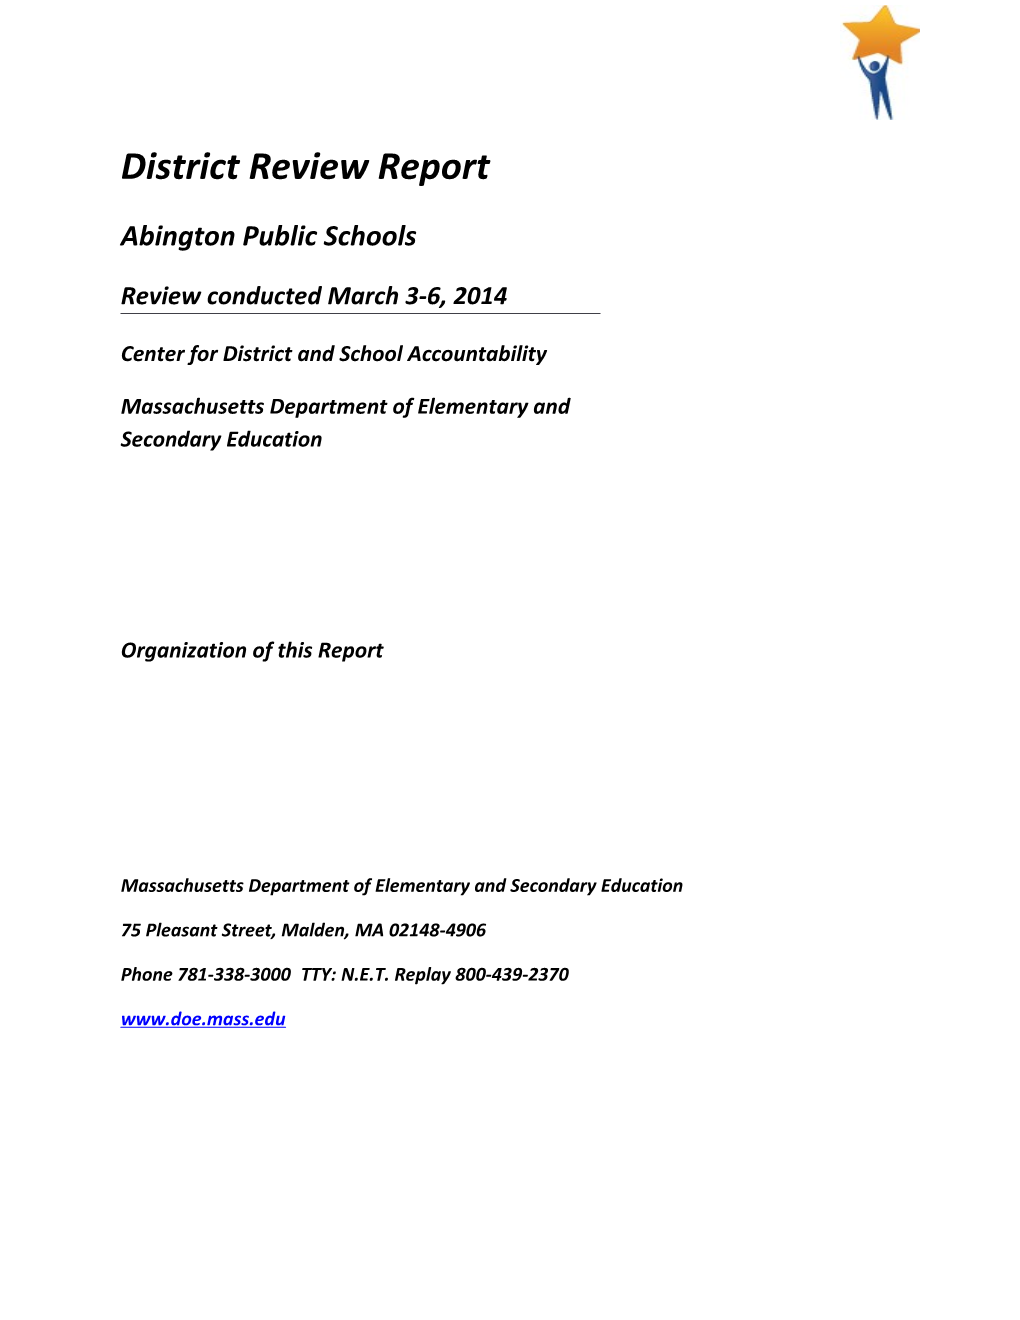 Abtington District Review Report 2014